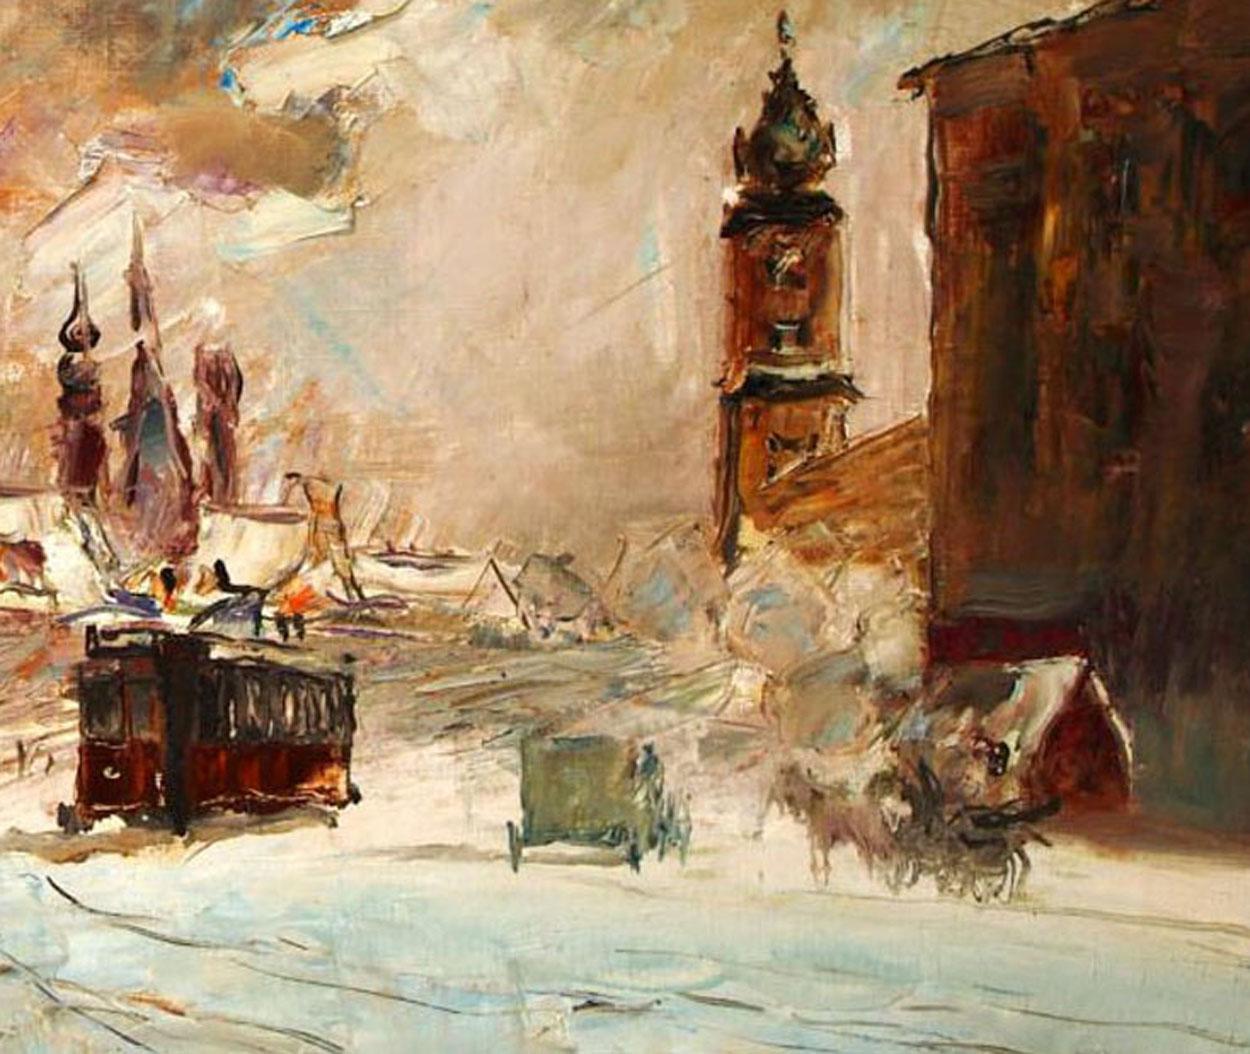 Wociech Kosowski 'Polish' Oil On Canvas City Scene in Winter 1